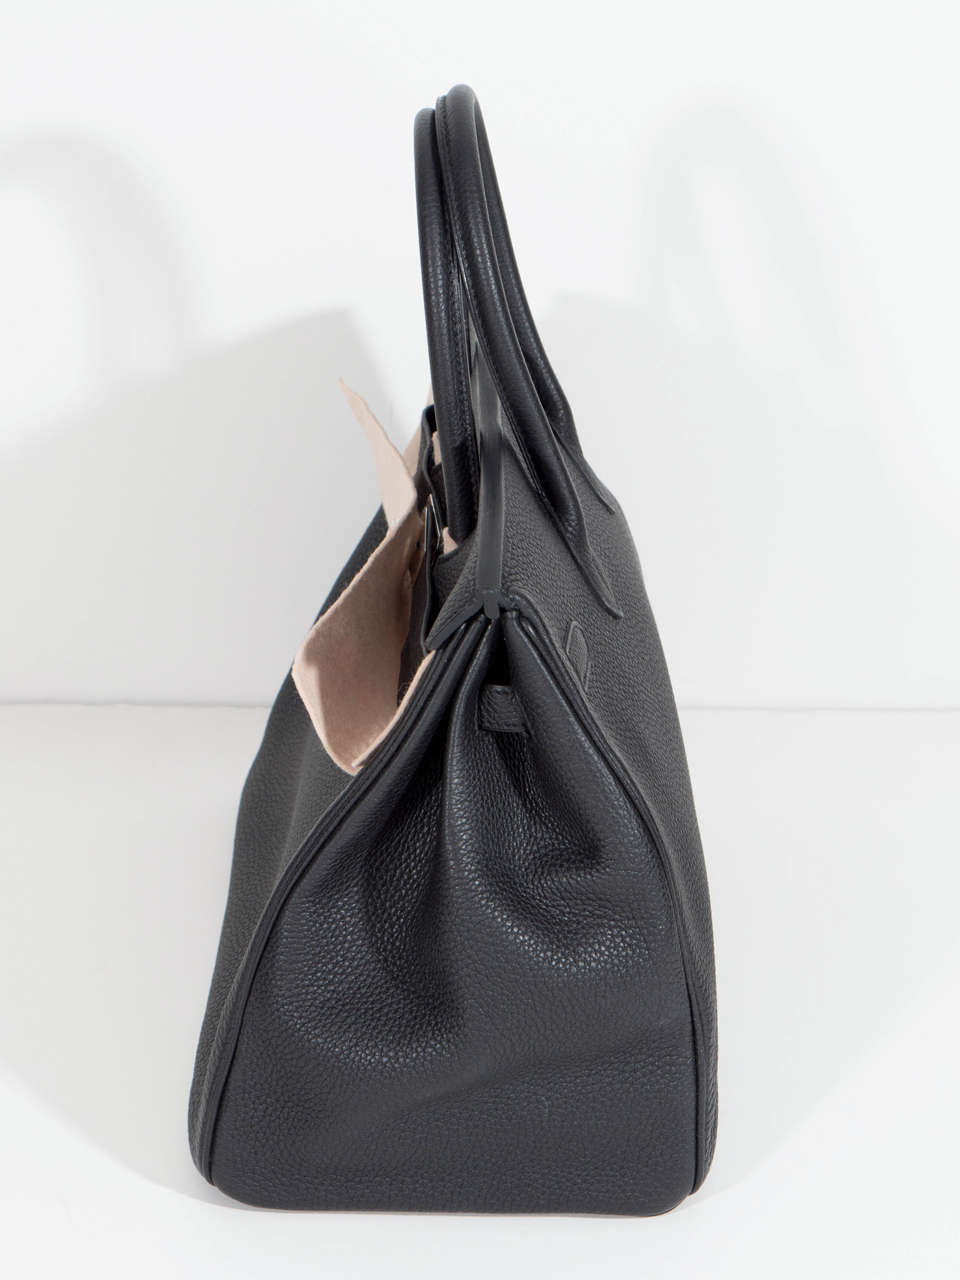 Contemporary Hermès Birkin Bag in Black Togo Leather with Palladium Hardware, 2009 For Sale